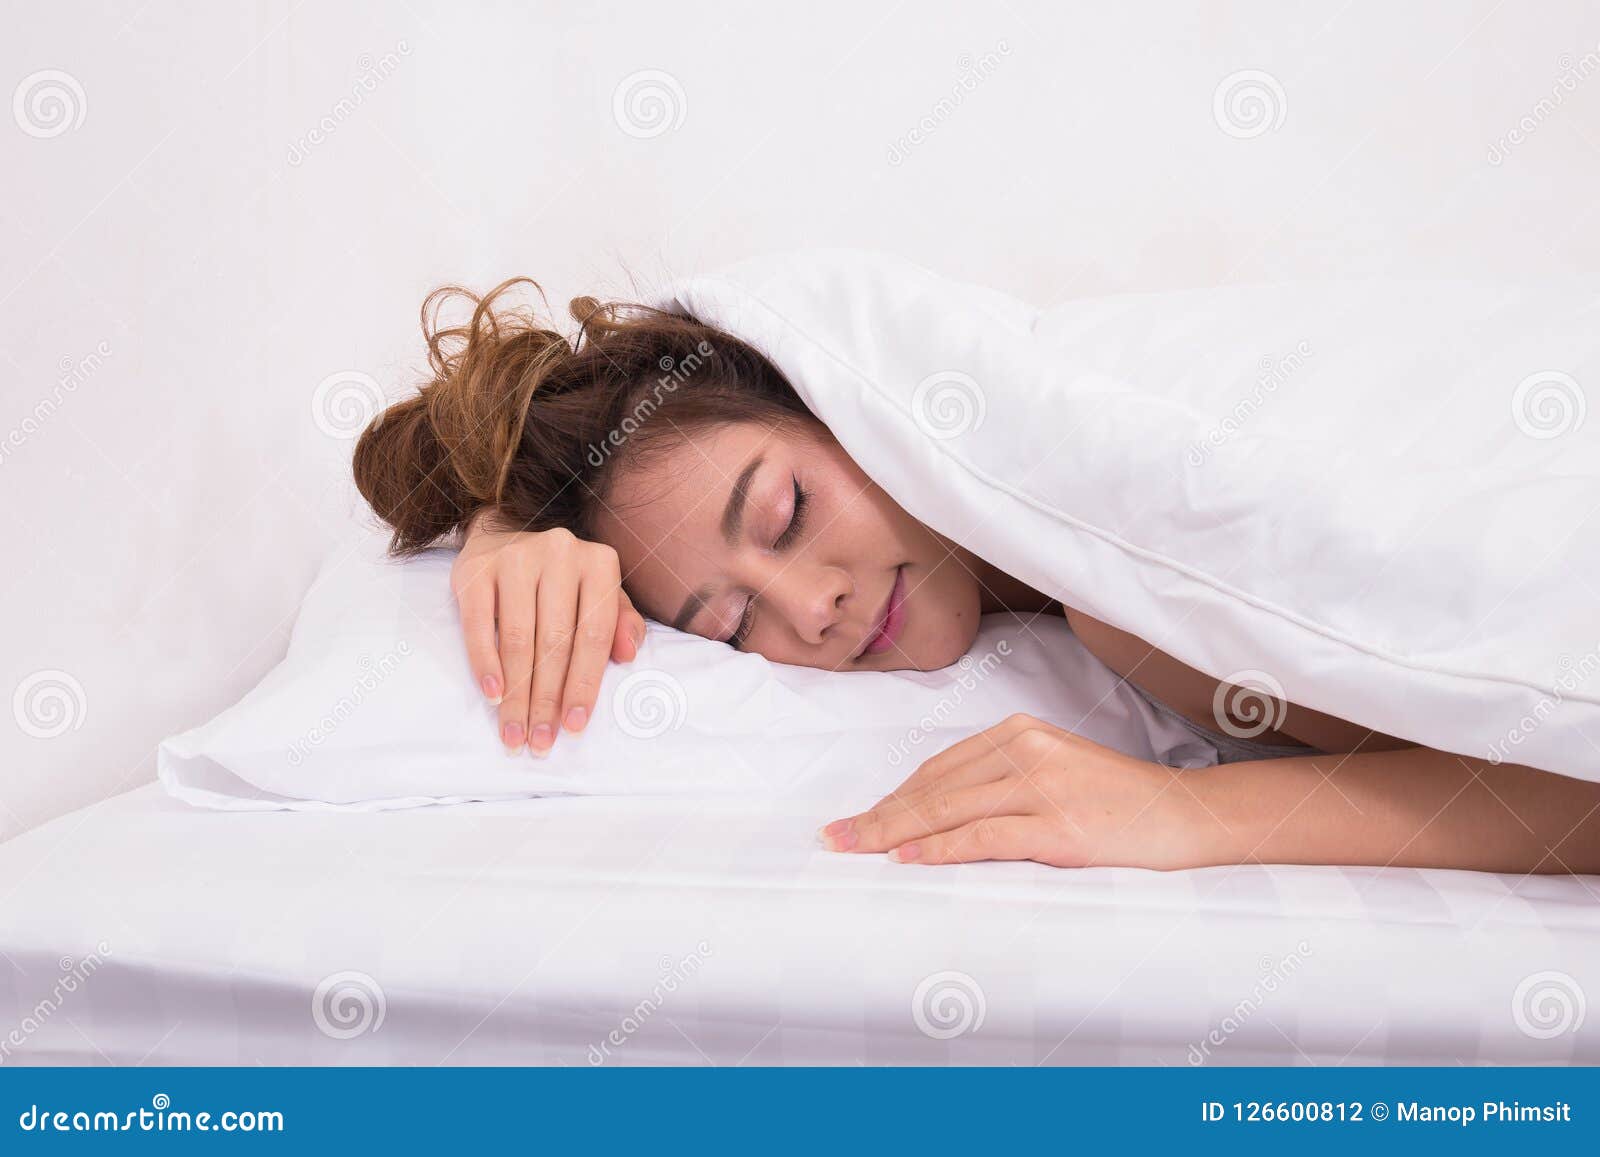 725 Sleeping Woman Lingerie Stock Photos - Free & Royalty-Free